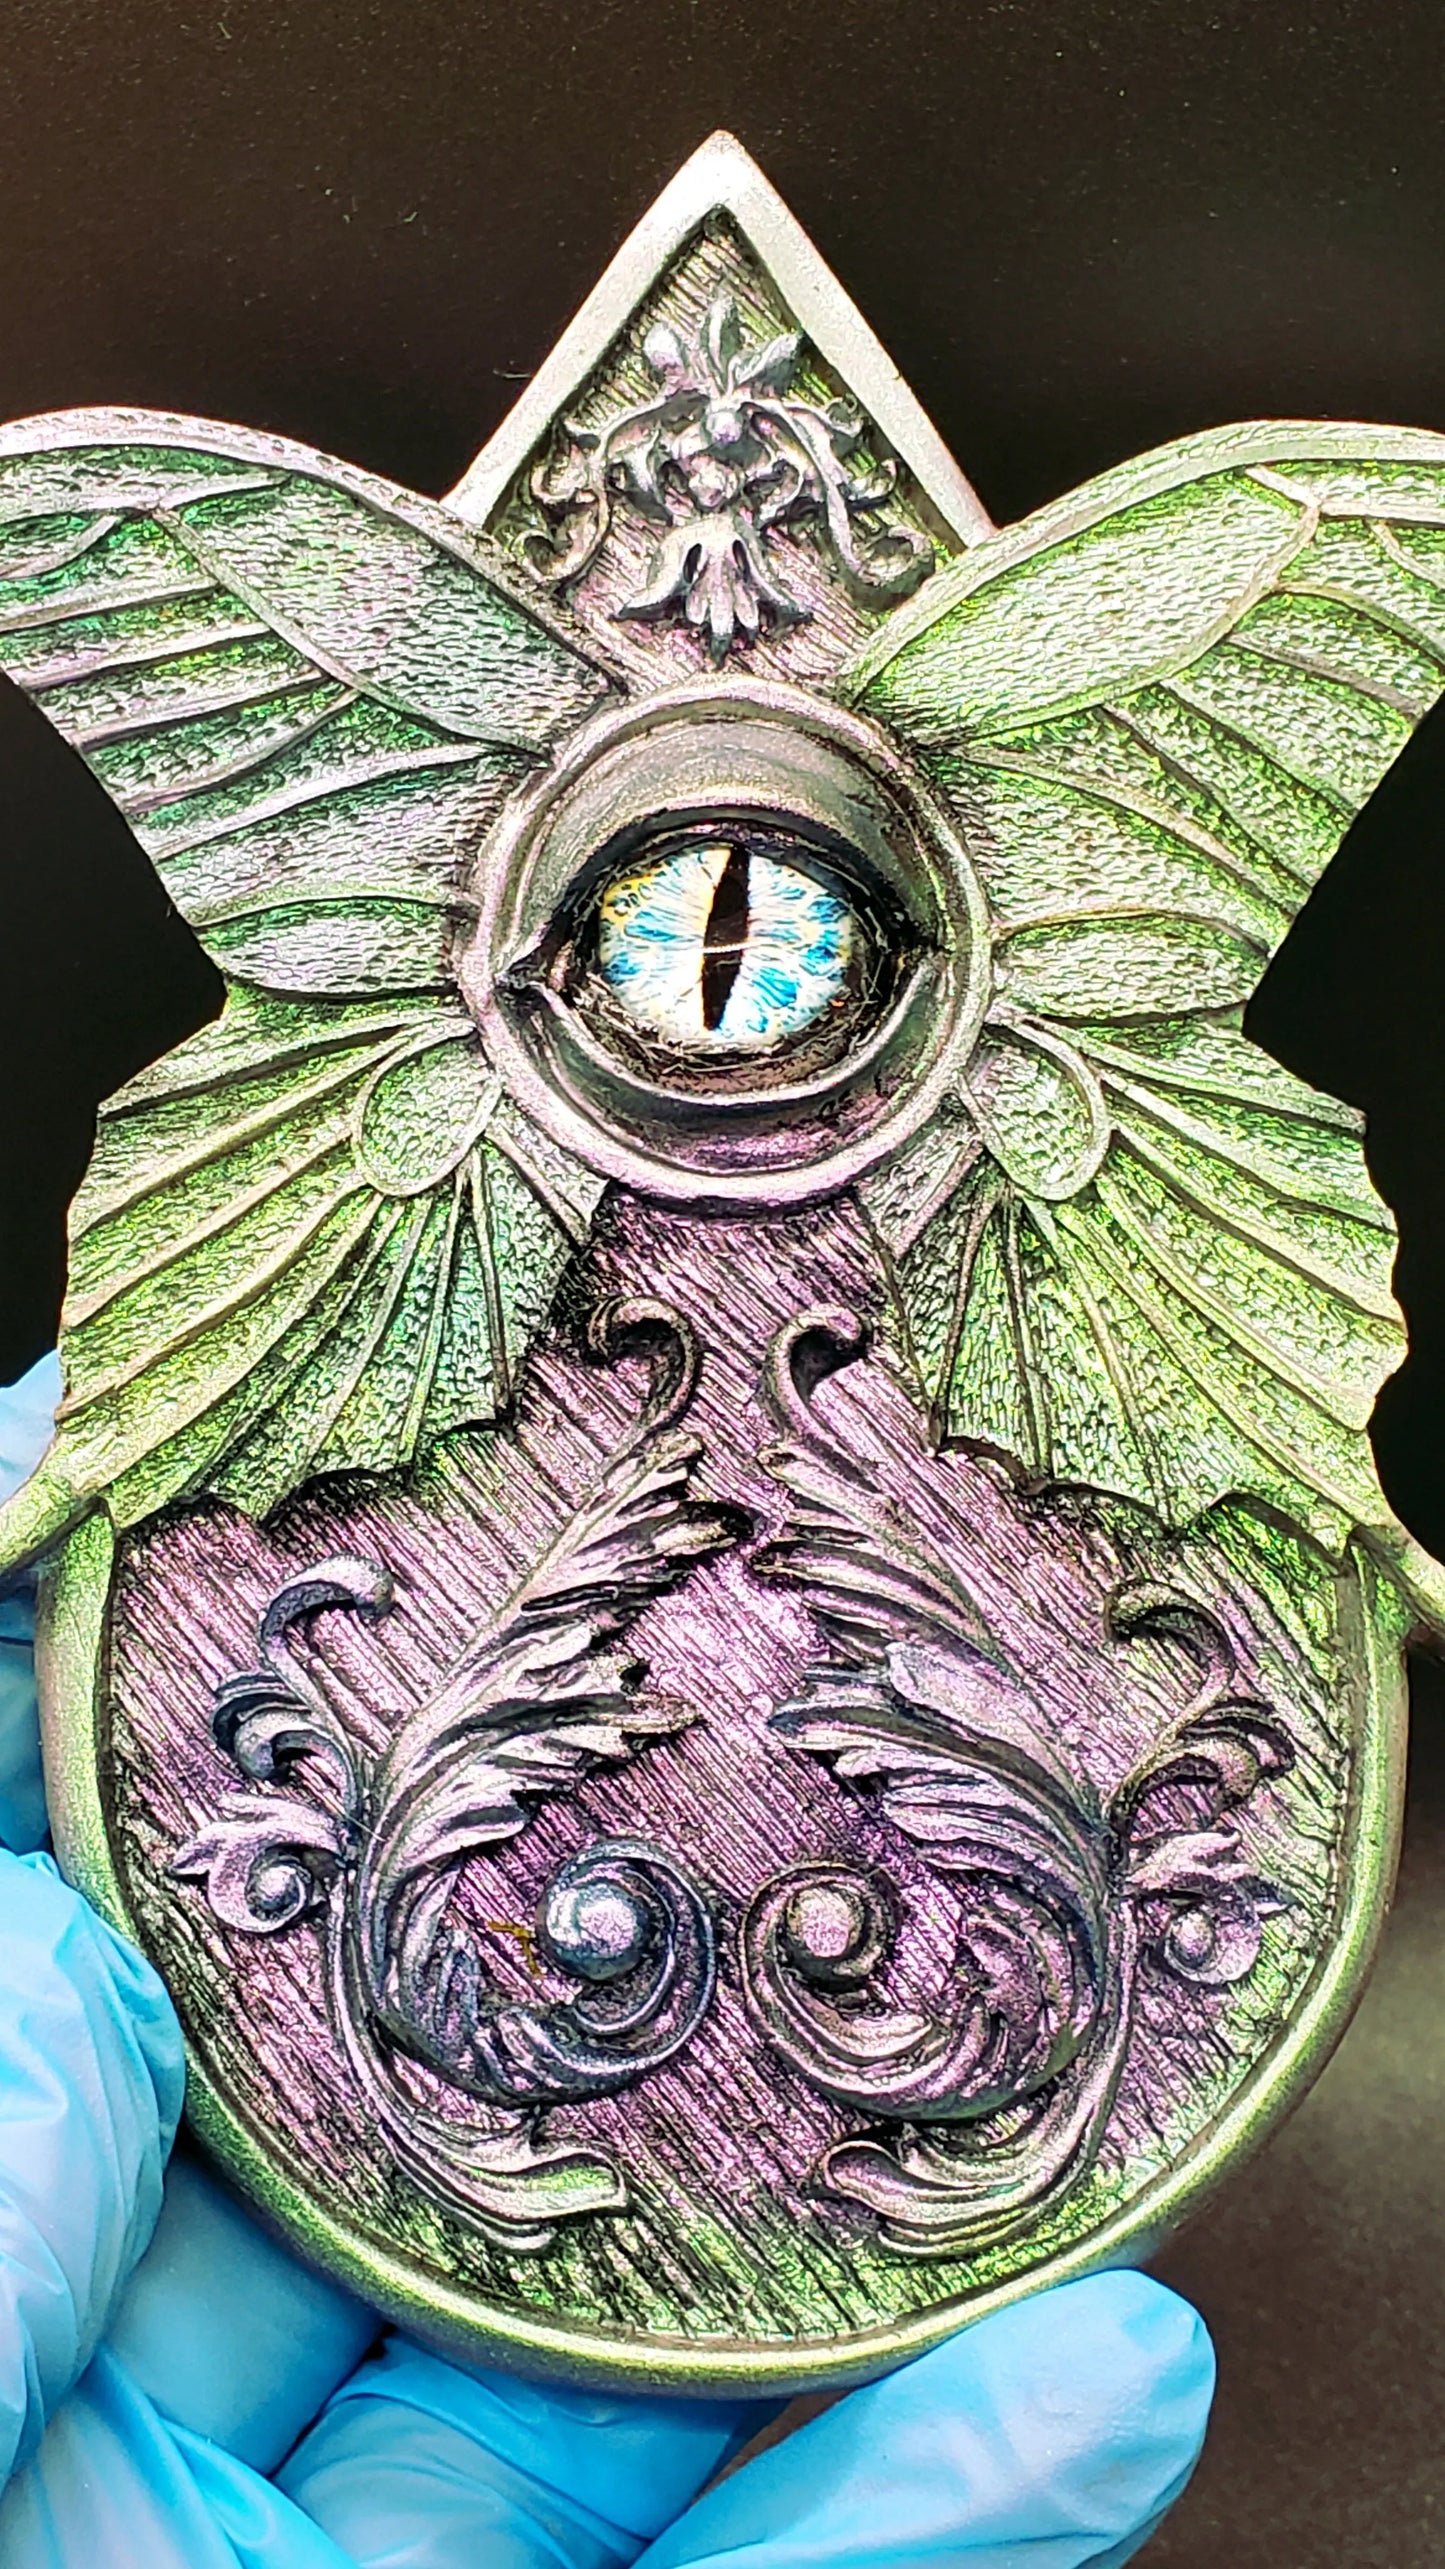 Evil Eye Lunar Moth Planchette    altar decor, blue, divination, evil eye, eye, eyes, gold, green, moon, moon phase, orange, ouija, Planchette, purple, witchy